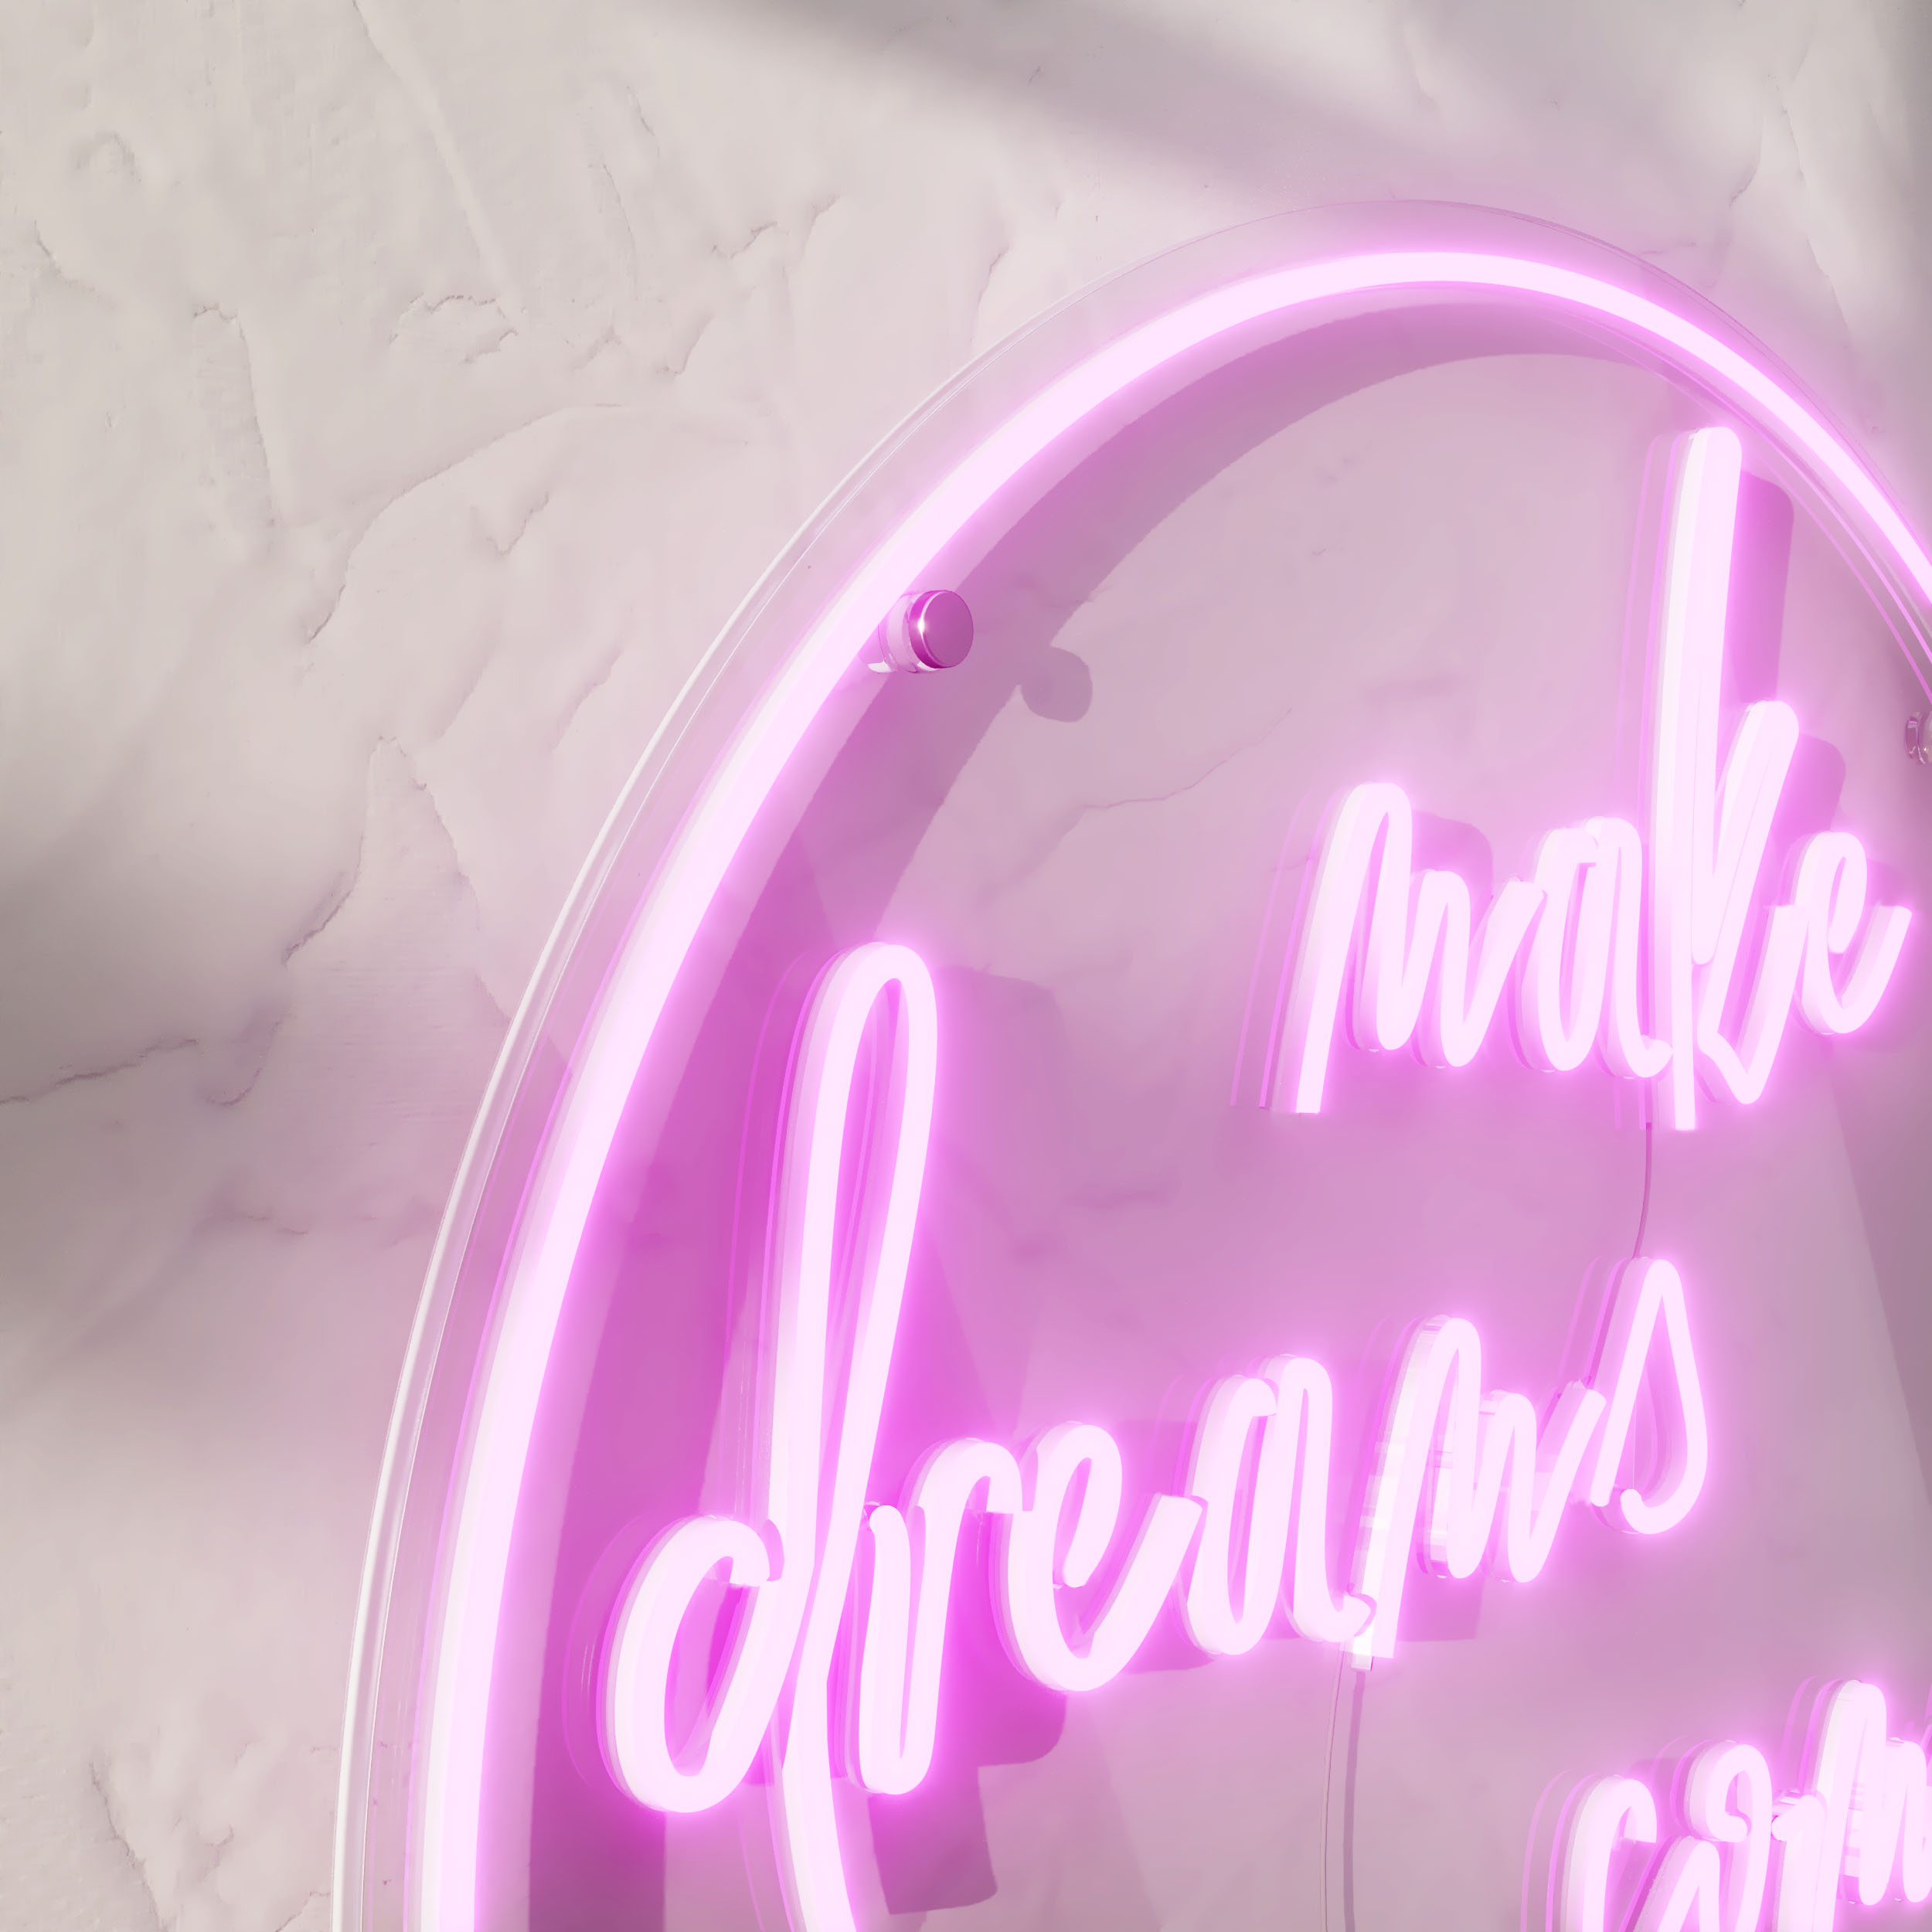 Neon Words - Make Dreams Come True - Futility Play Smart